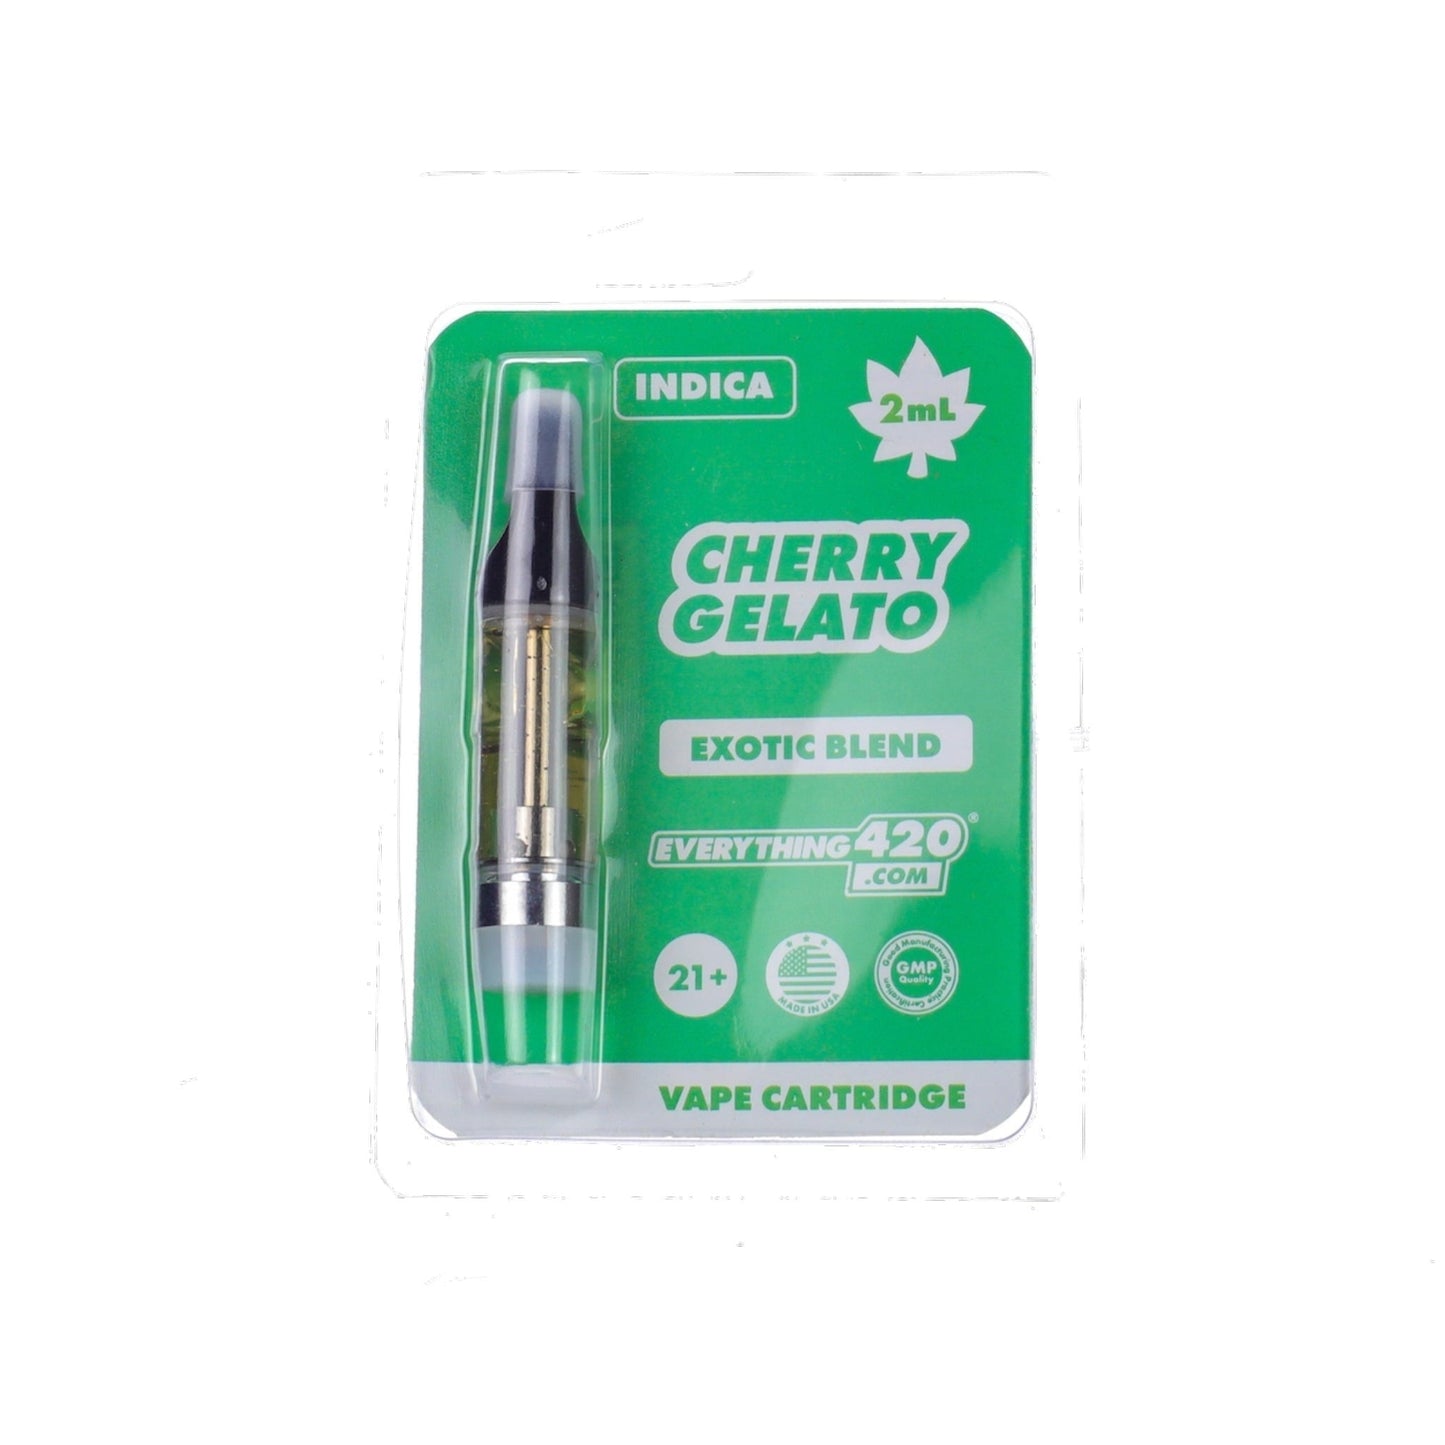 Everything 420 Delta 8 Exotic Blend Cartridge - 2000mg Cherry Gelato (I)